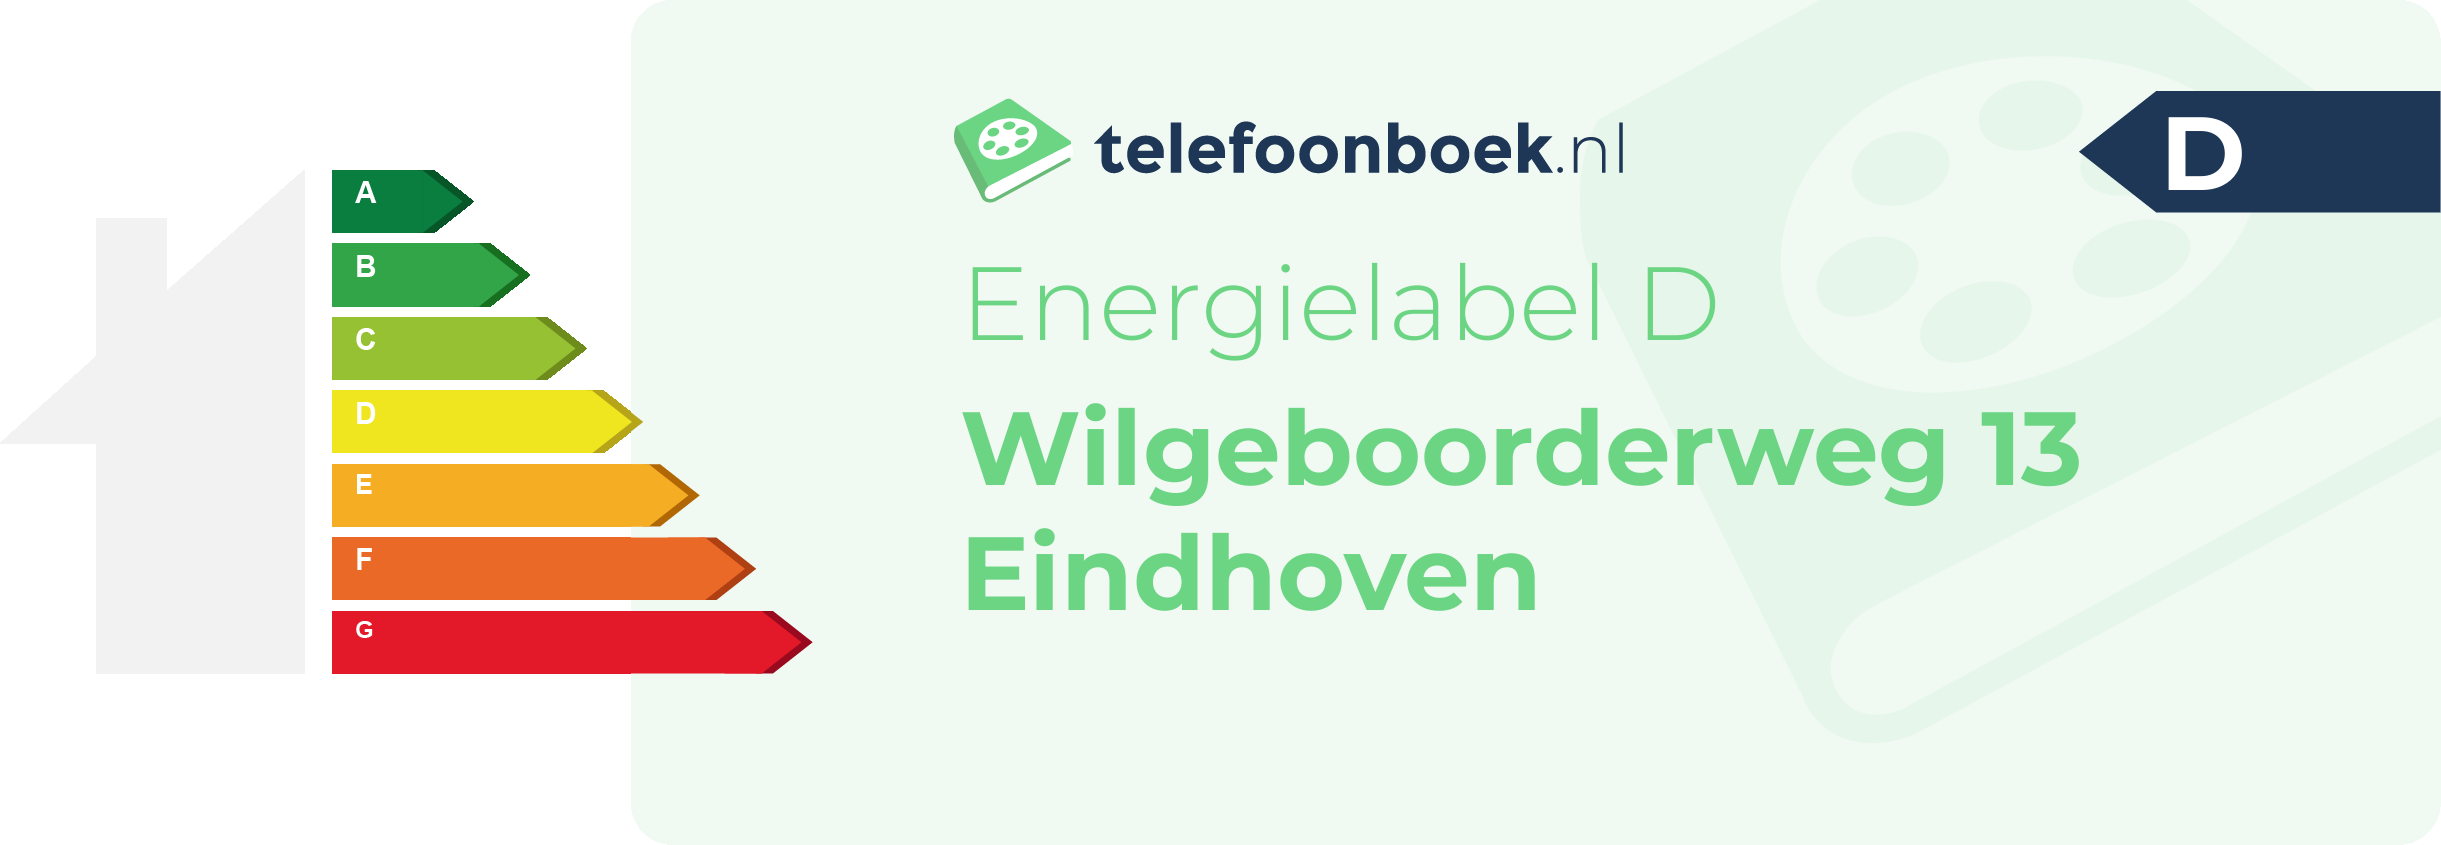 Energielabel Wilgeboorderweg 13 Eindhoven